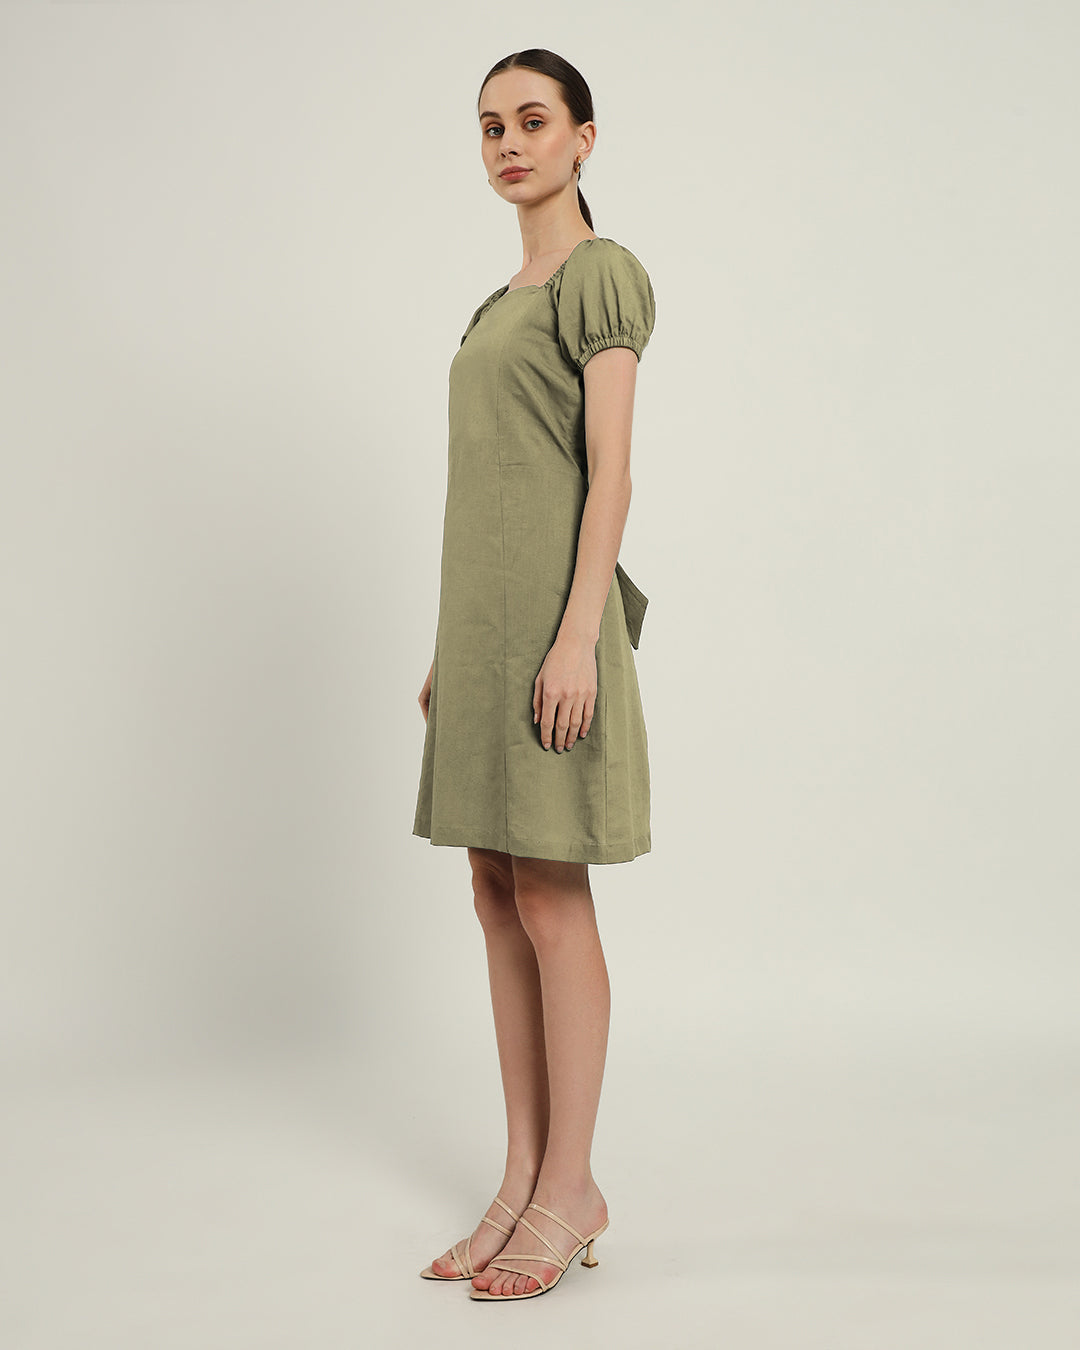 The Arar Daisy Olive Linen Dress